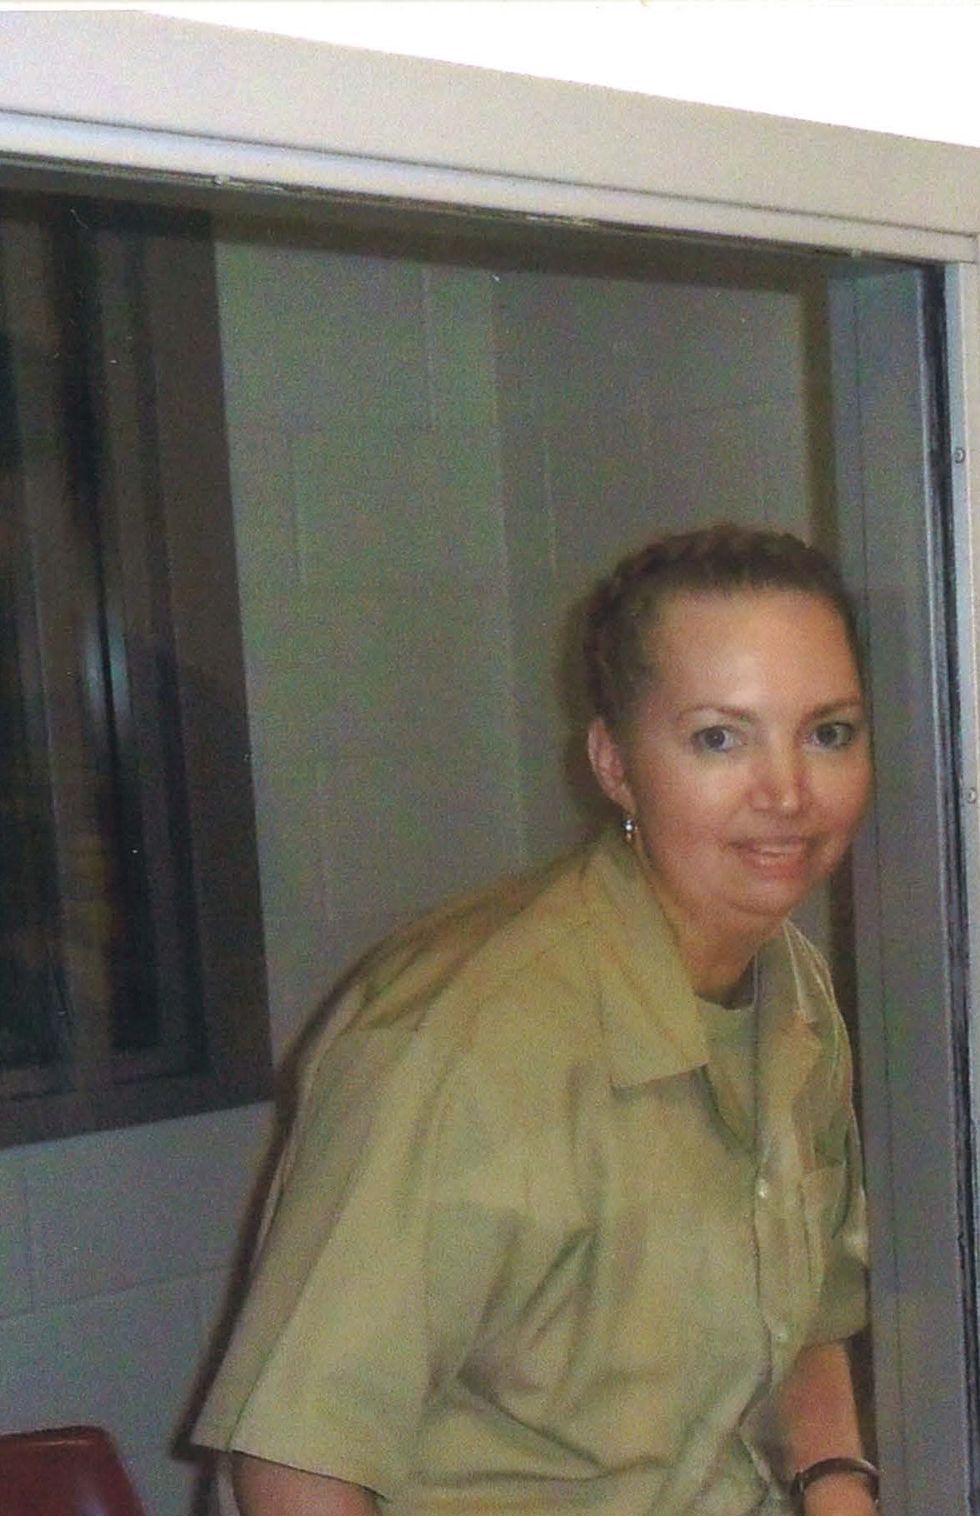 lisa montgomery in prison